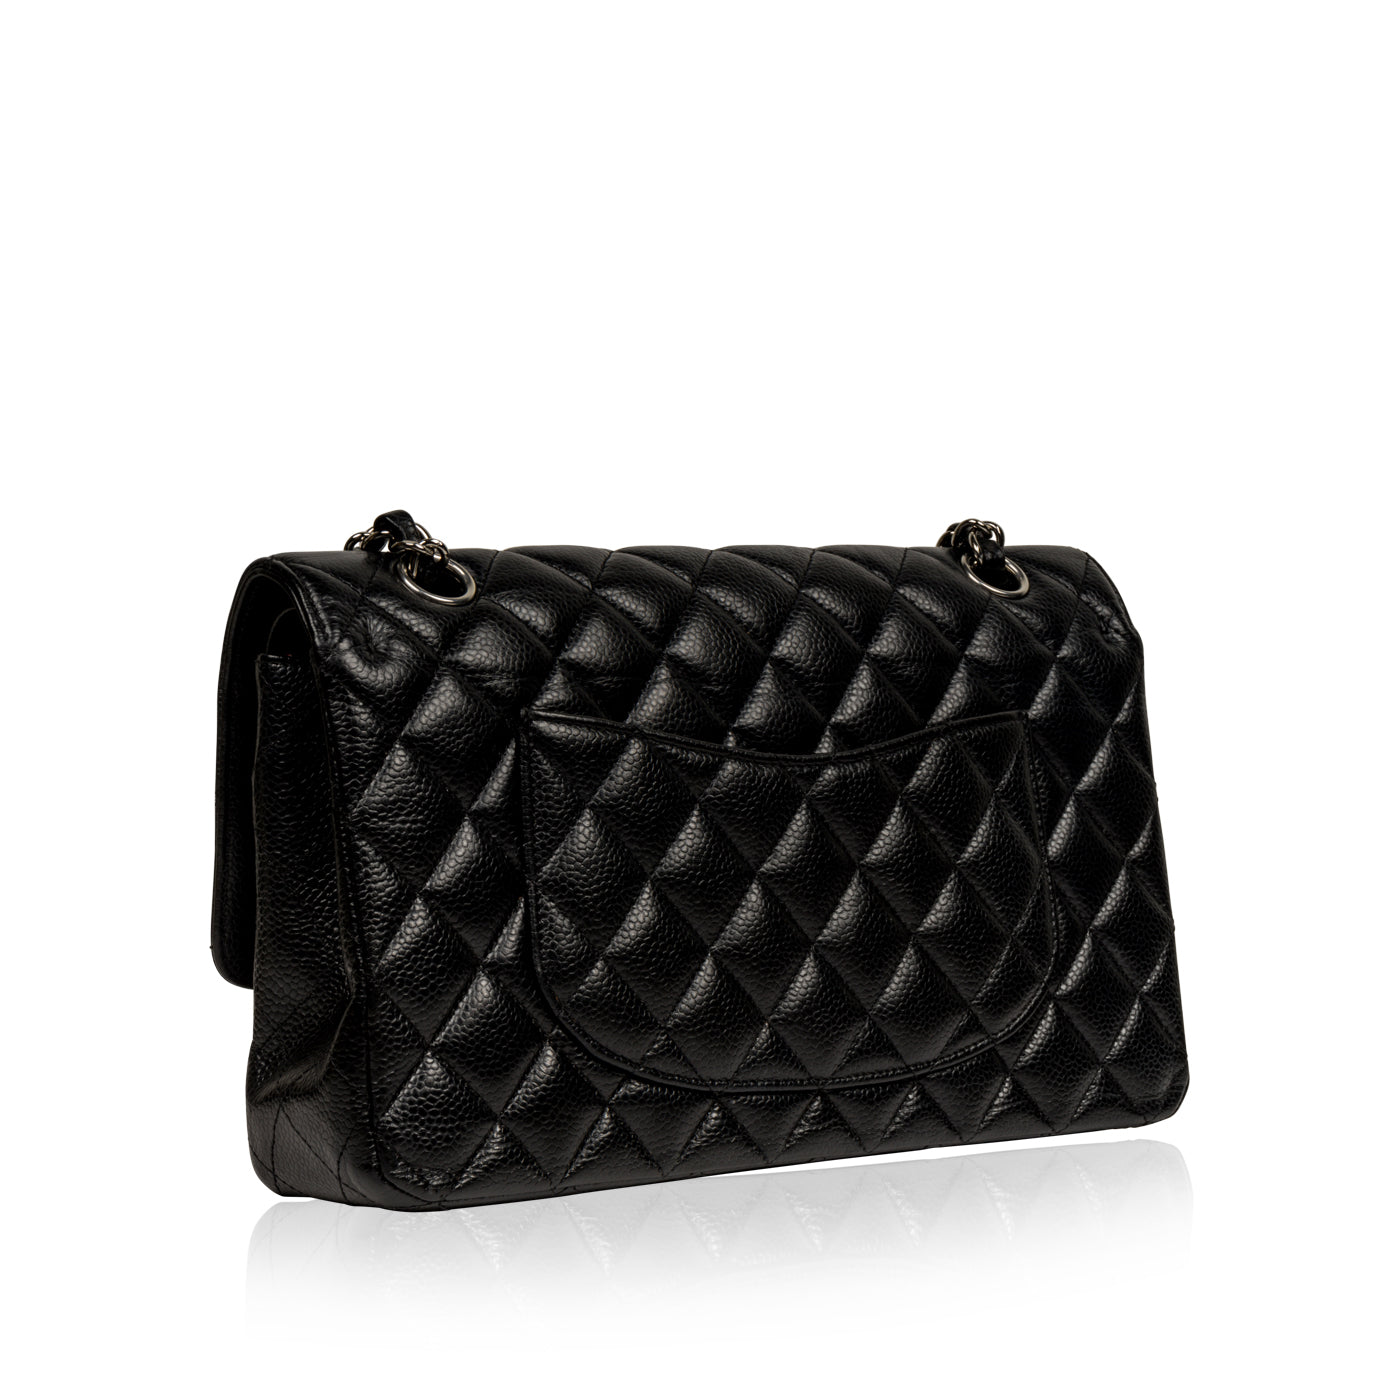 Chanel - Classic Flap Bag Medium - Black Caviar - SHW - Pre-Loved